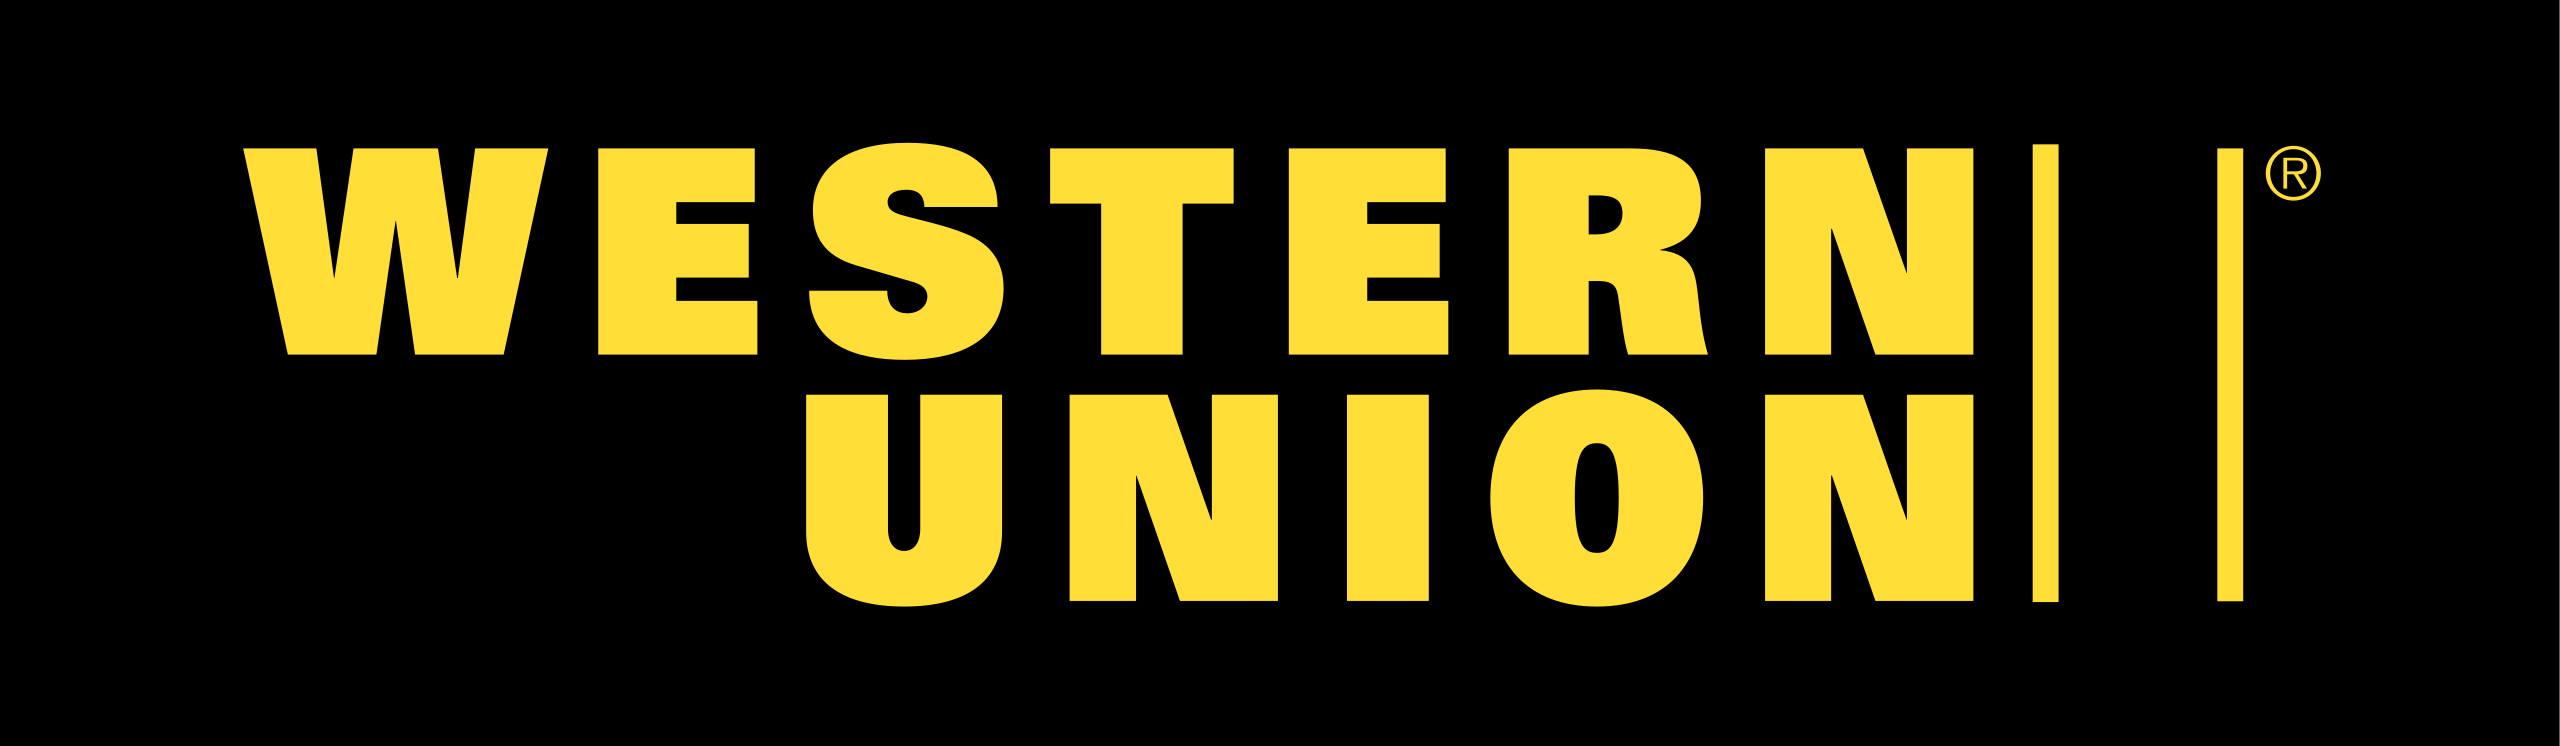 Western Union telefon